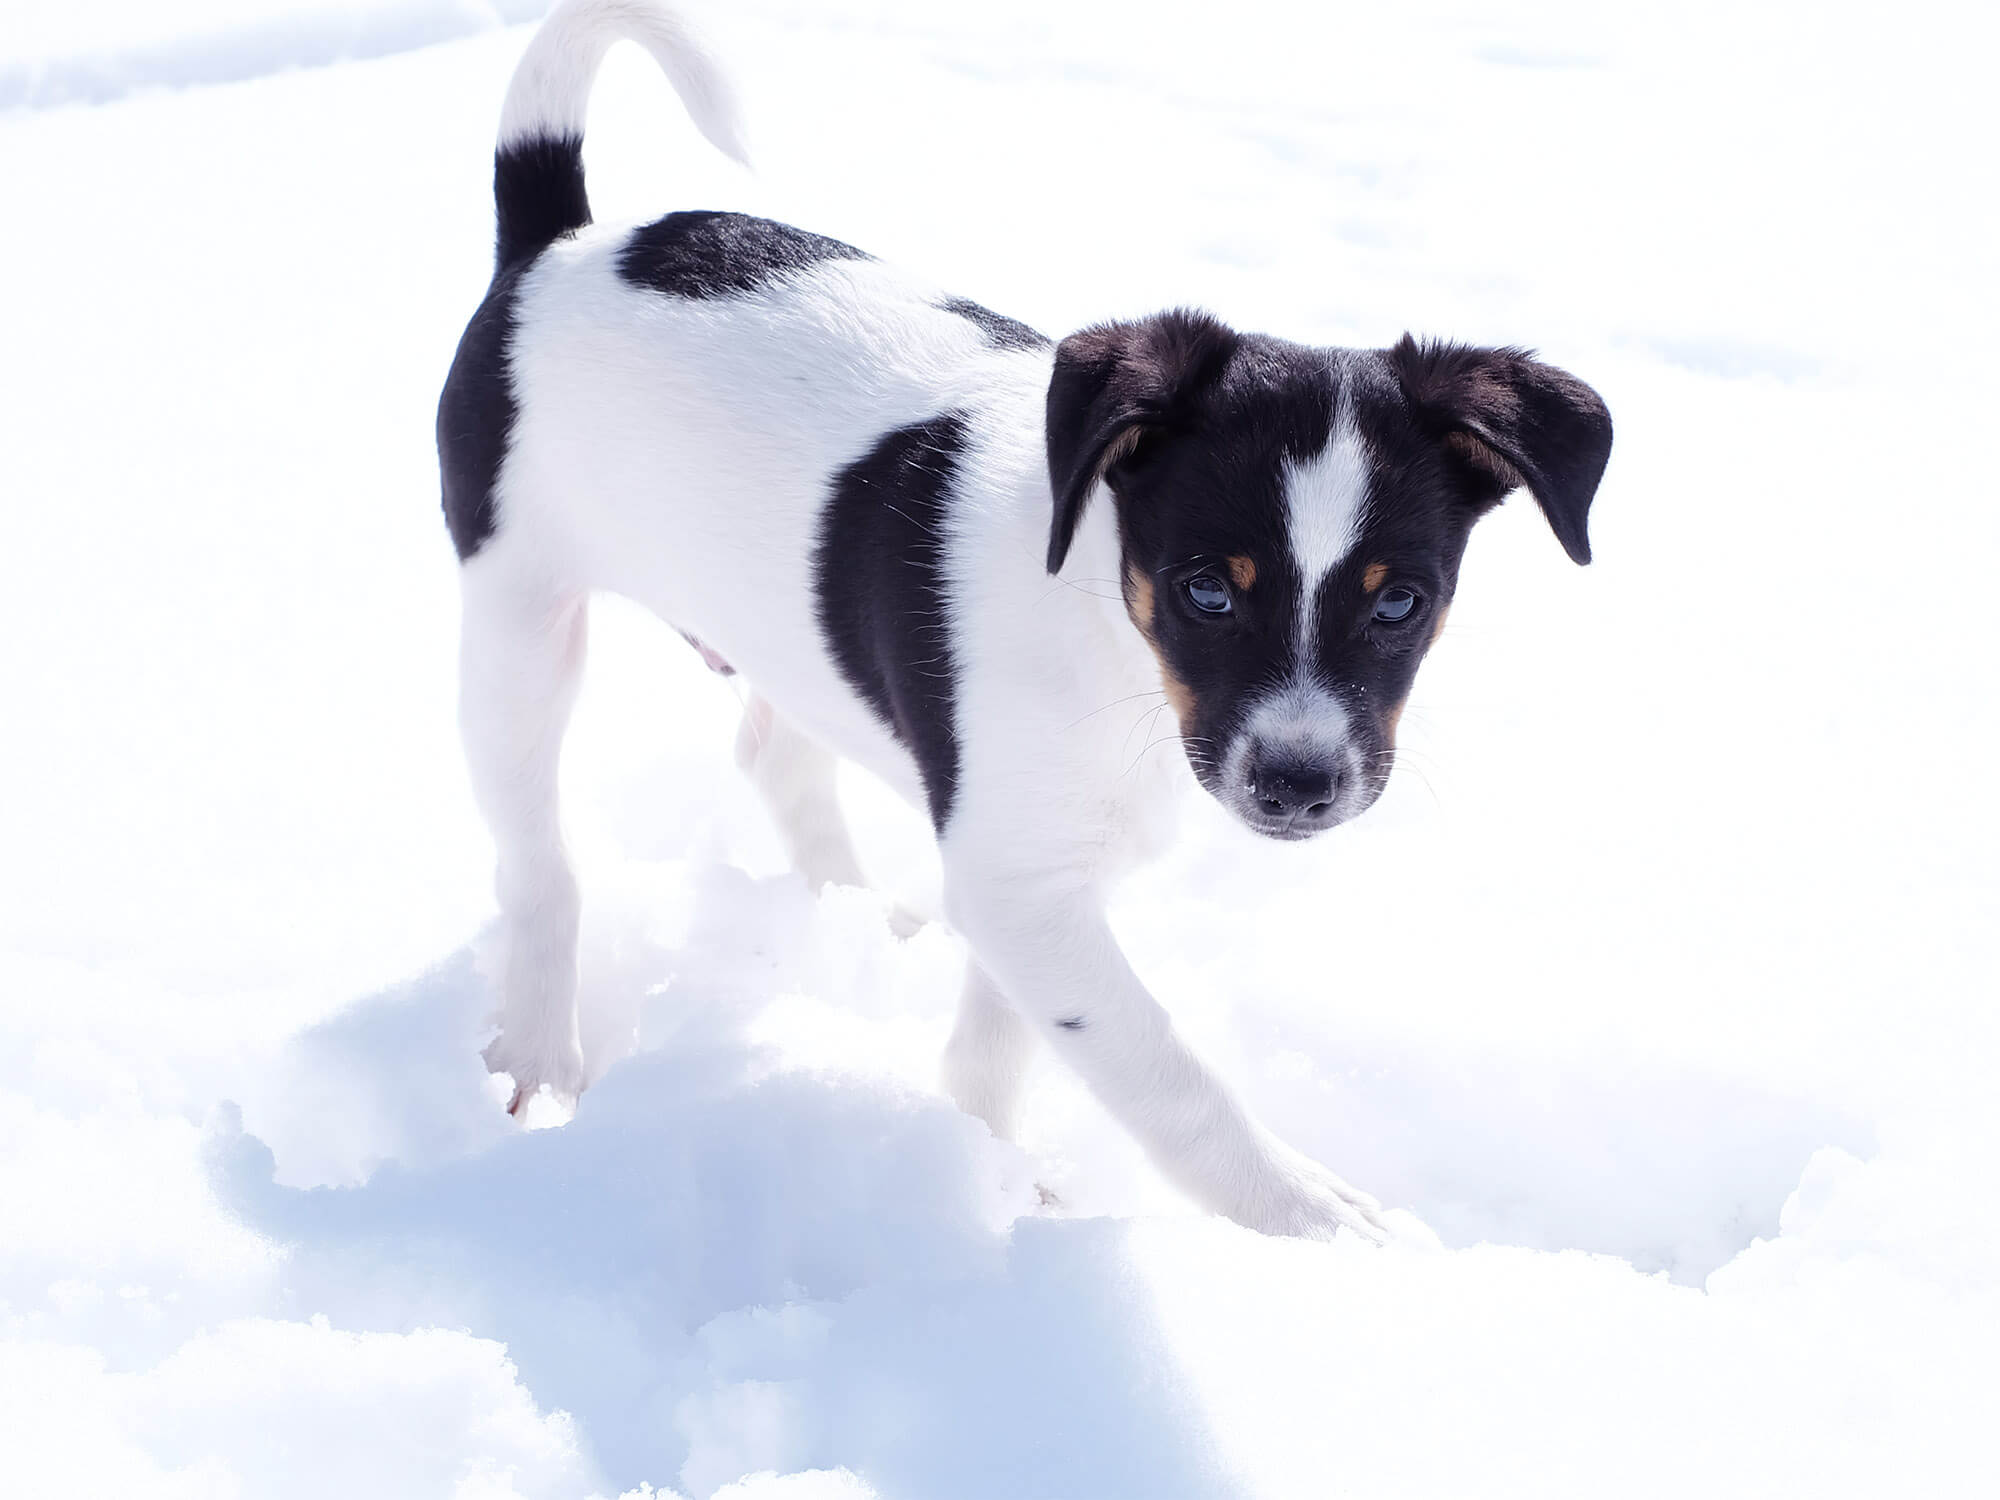 Danish Swedish Farmdog Bølle, puppy in the snow